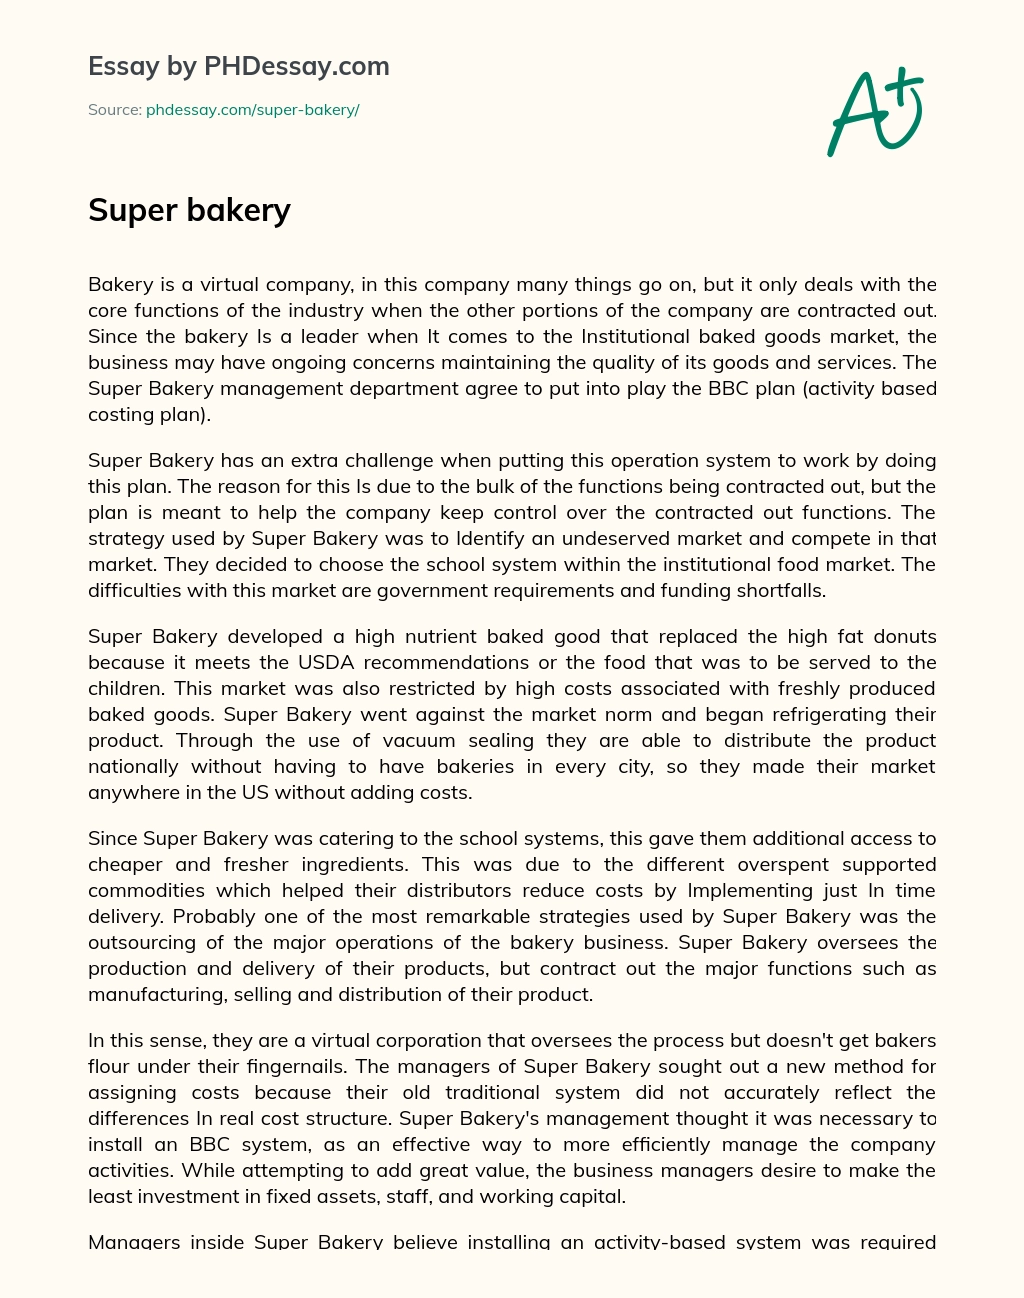 Super bakery essay